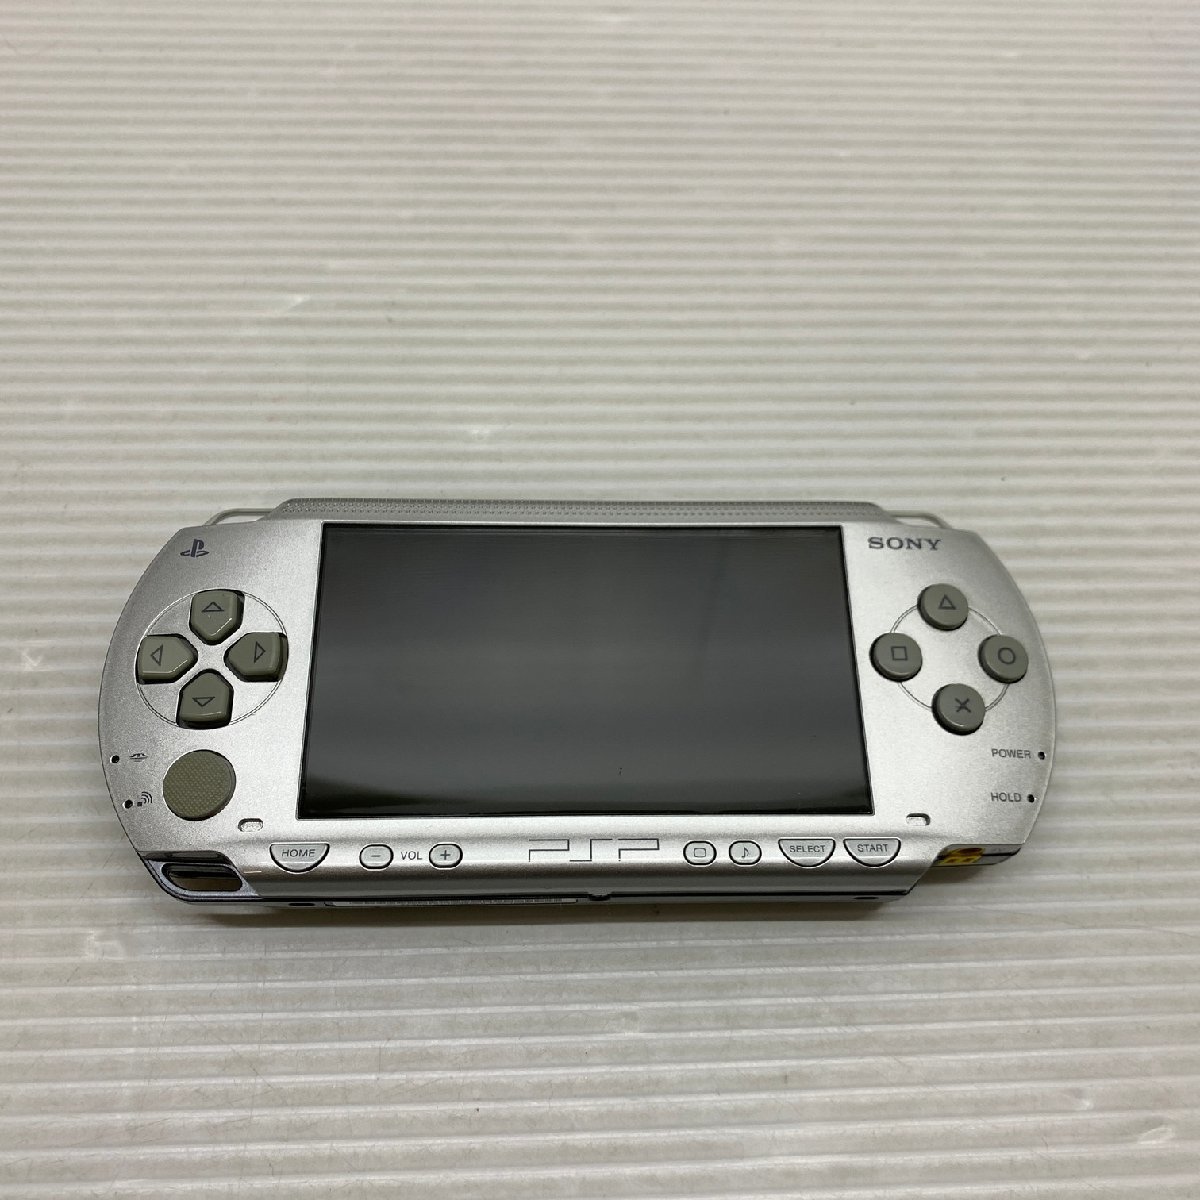 MIN【ジャンク品】 MSMG SONY PSP シルバー PSP-1000 ジャンク品 電源不可本体のみ 〈23-240311-MK-17-MIN〉_画像1